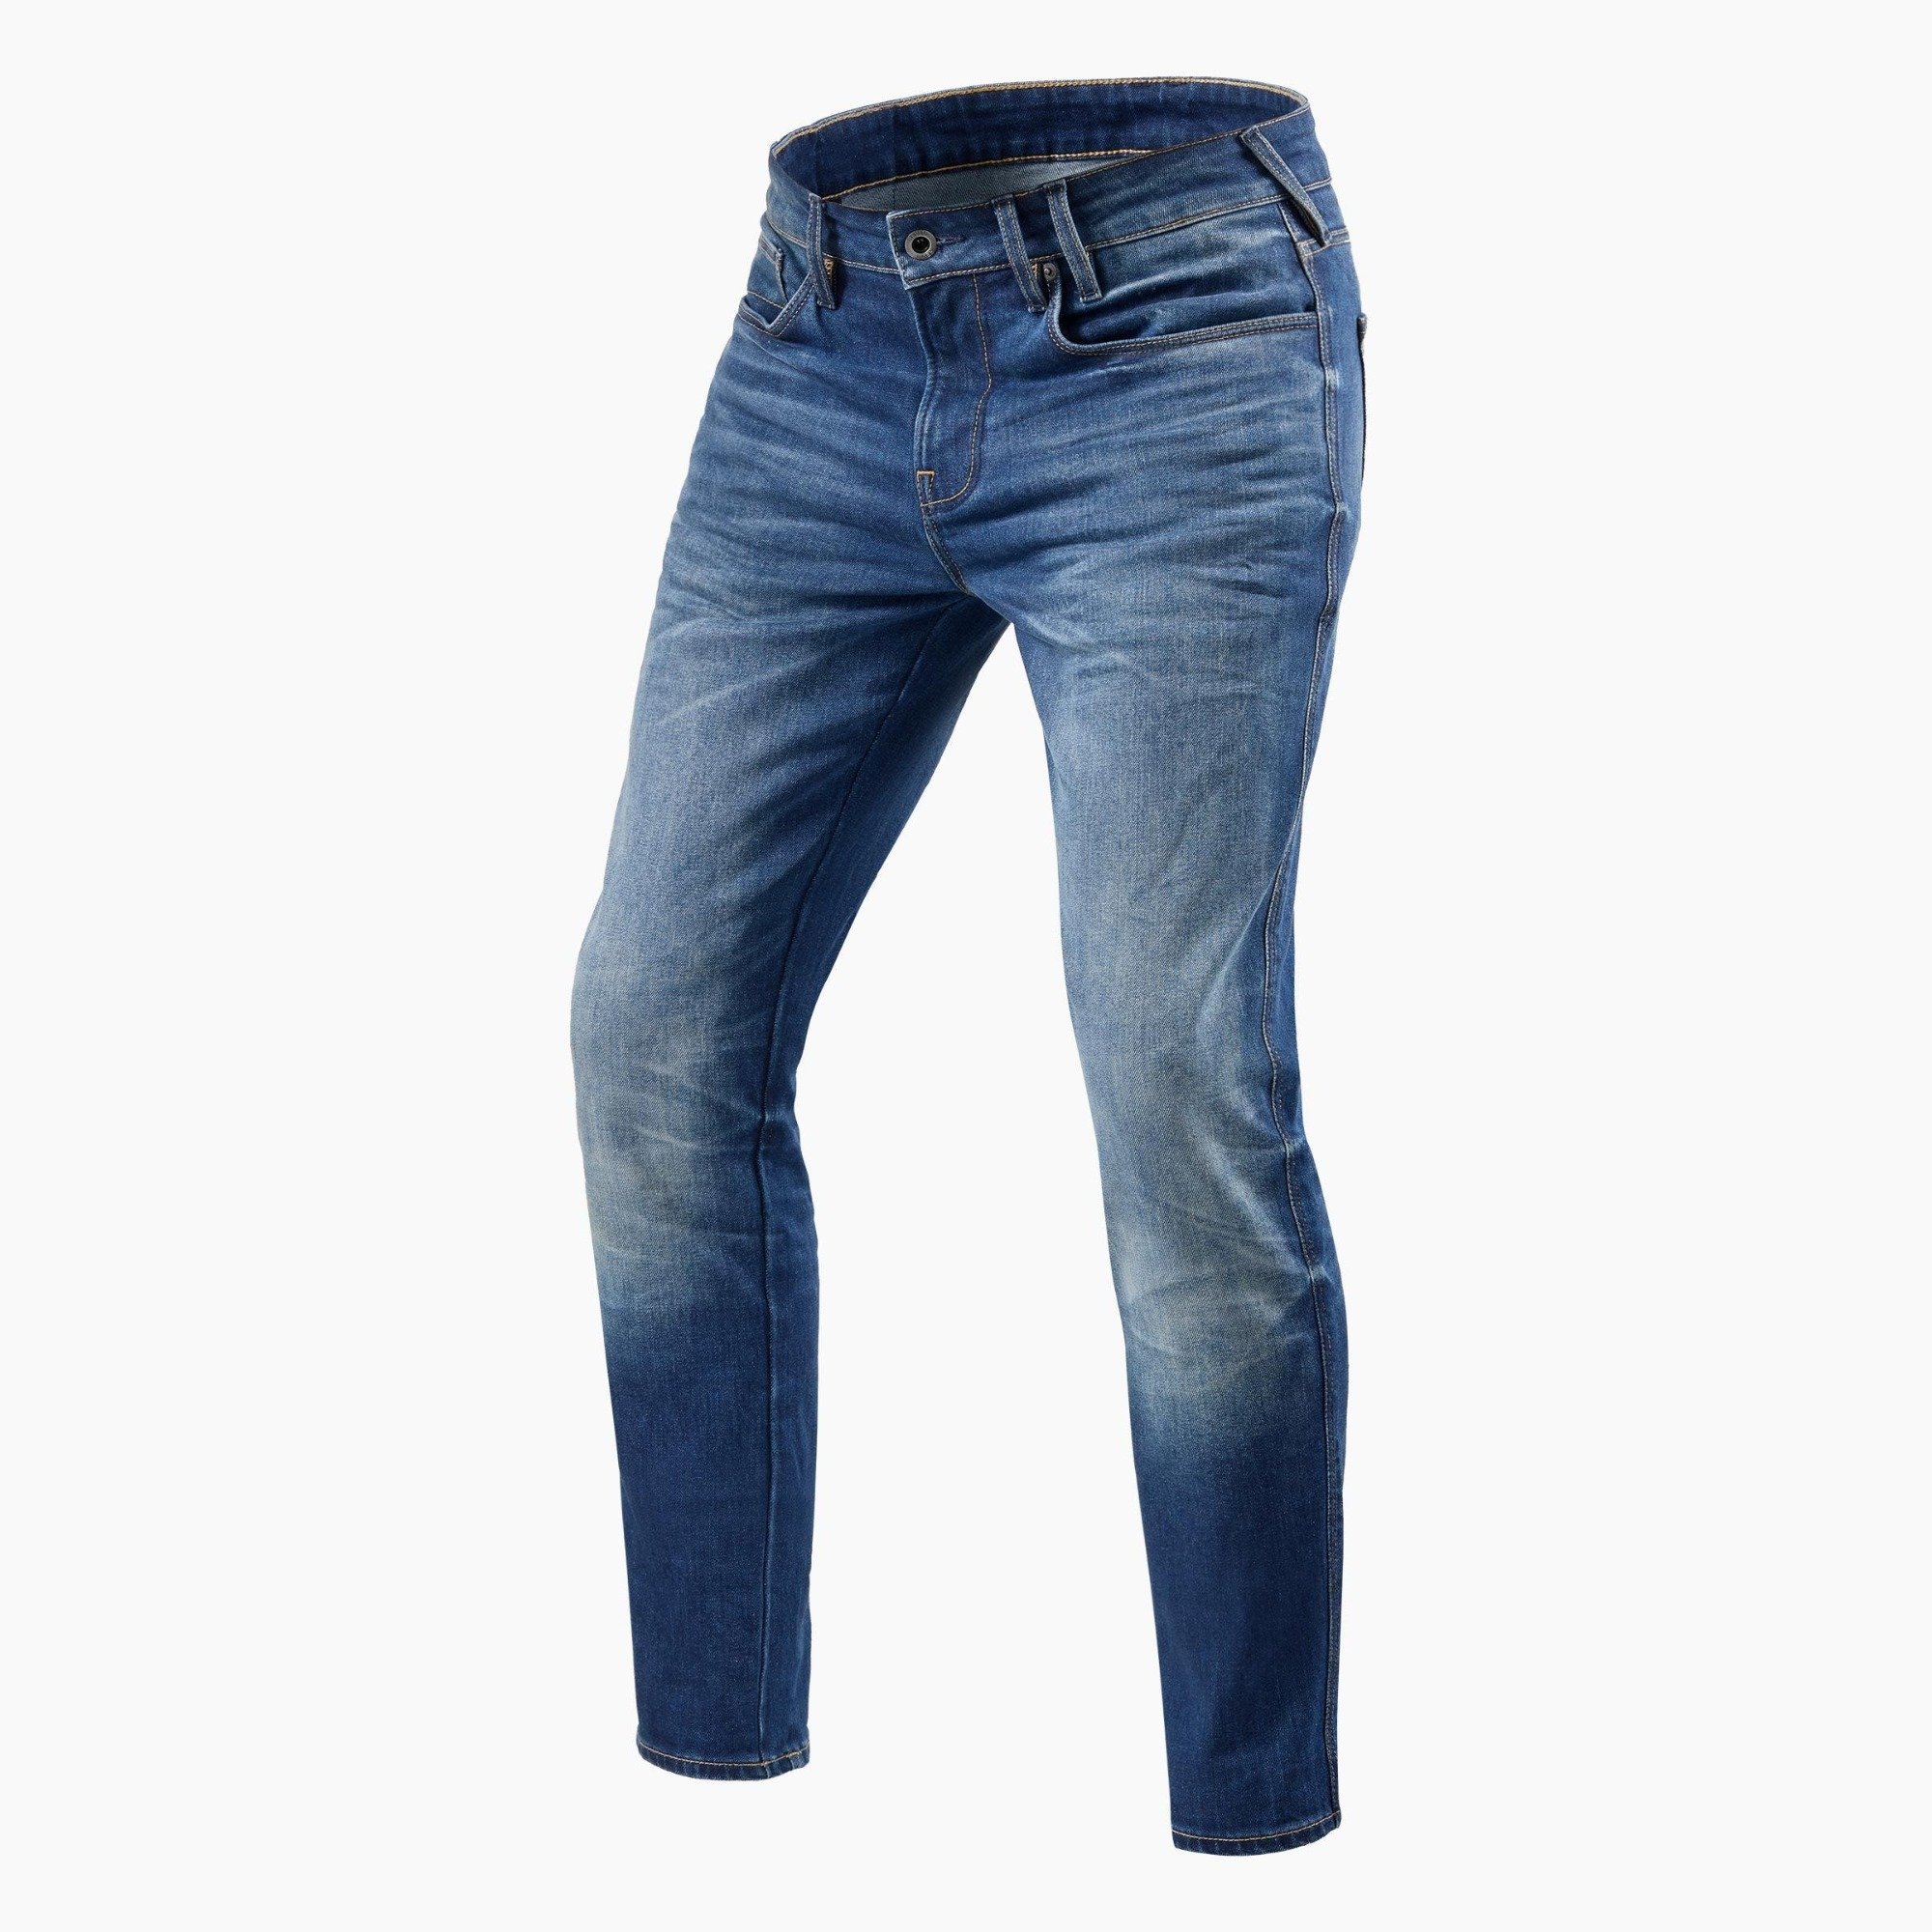 Image of REV'IT! Jeans Carlin SK Mid Blue Used Motorcycle Jeans Size L34/W33 EN